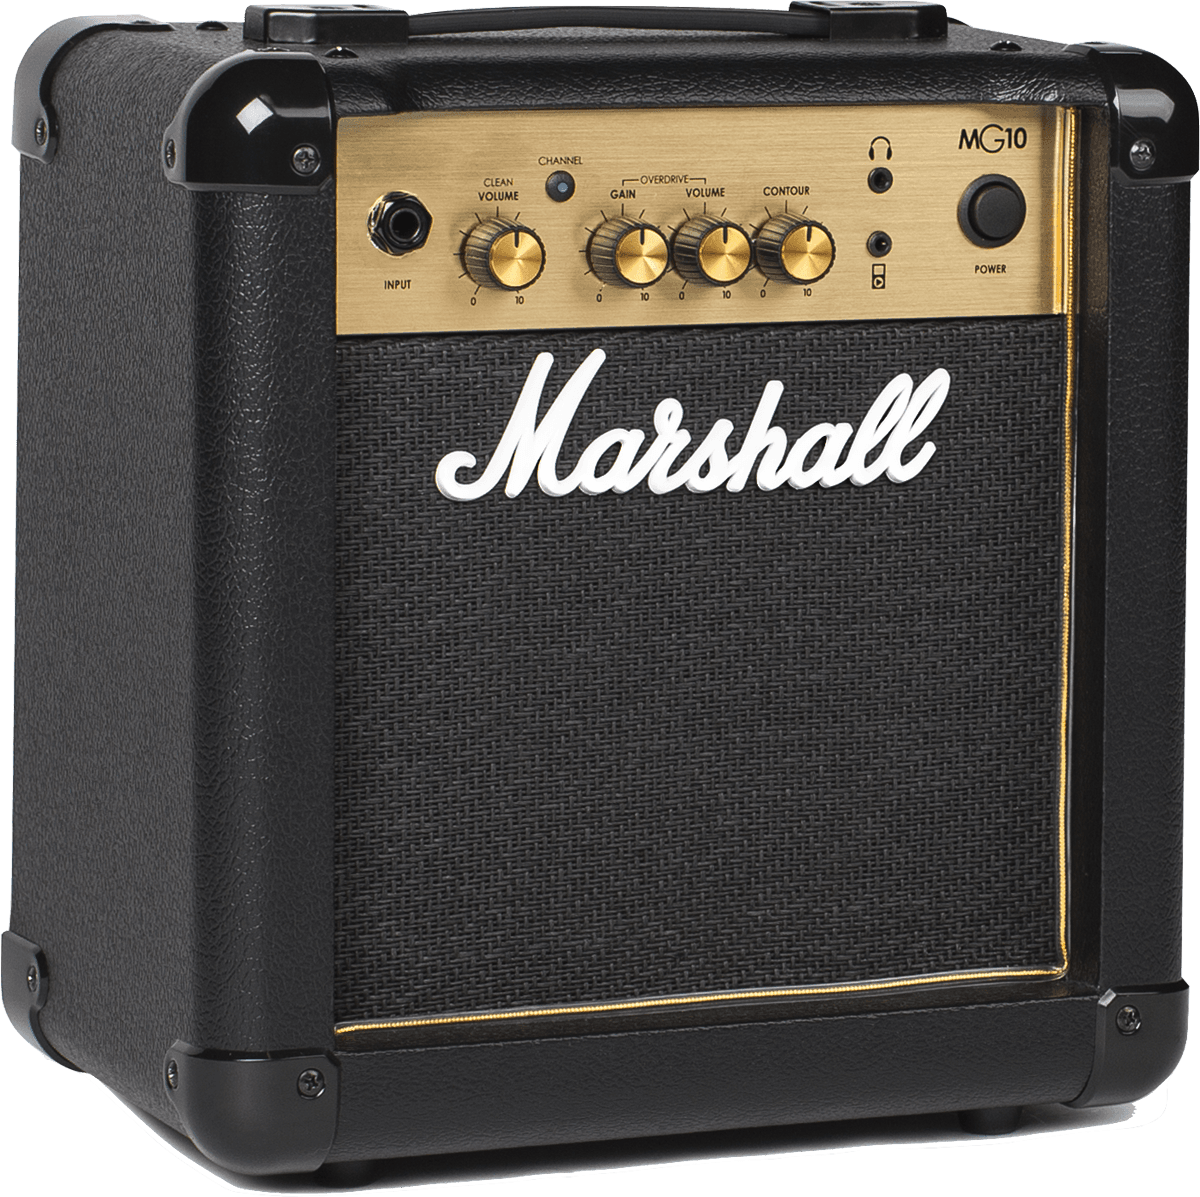 Eastone Tl70 + Marshall Mg10 +housse + Courroie + Cable + Mediators - 3 Tone Sunburst - Packs guitarra eléctrica - Variation 6